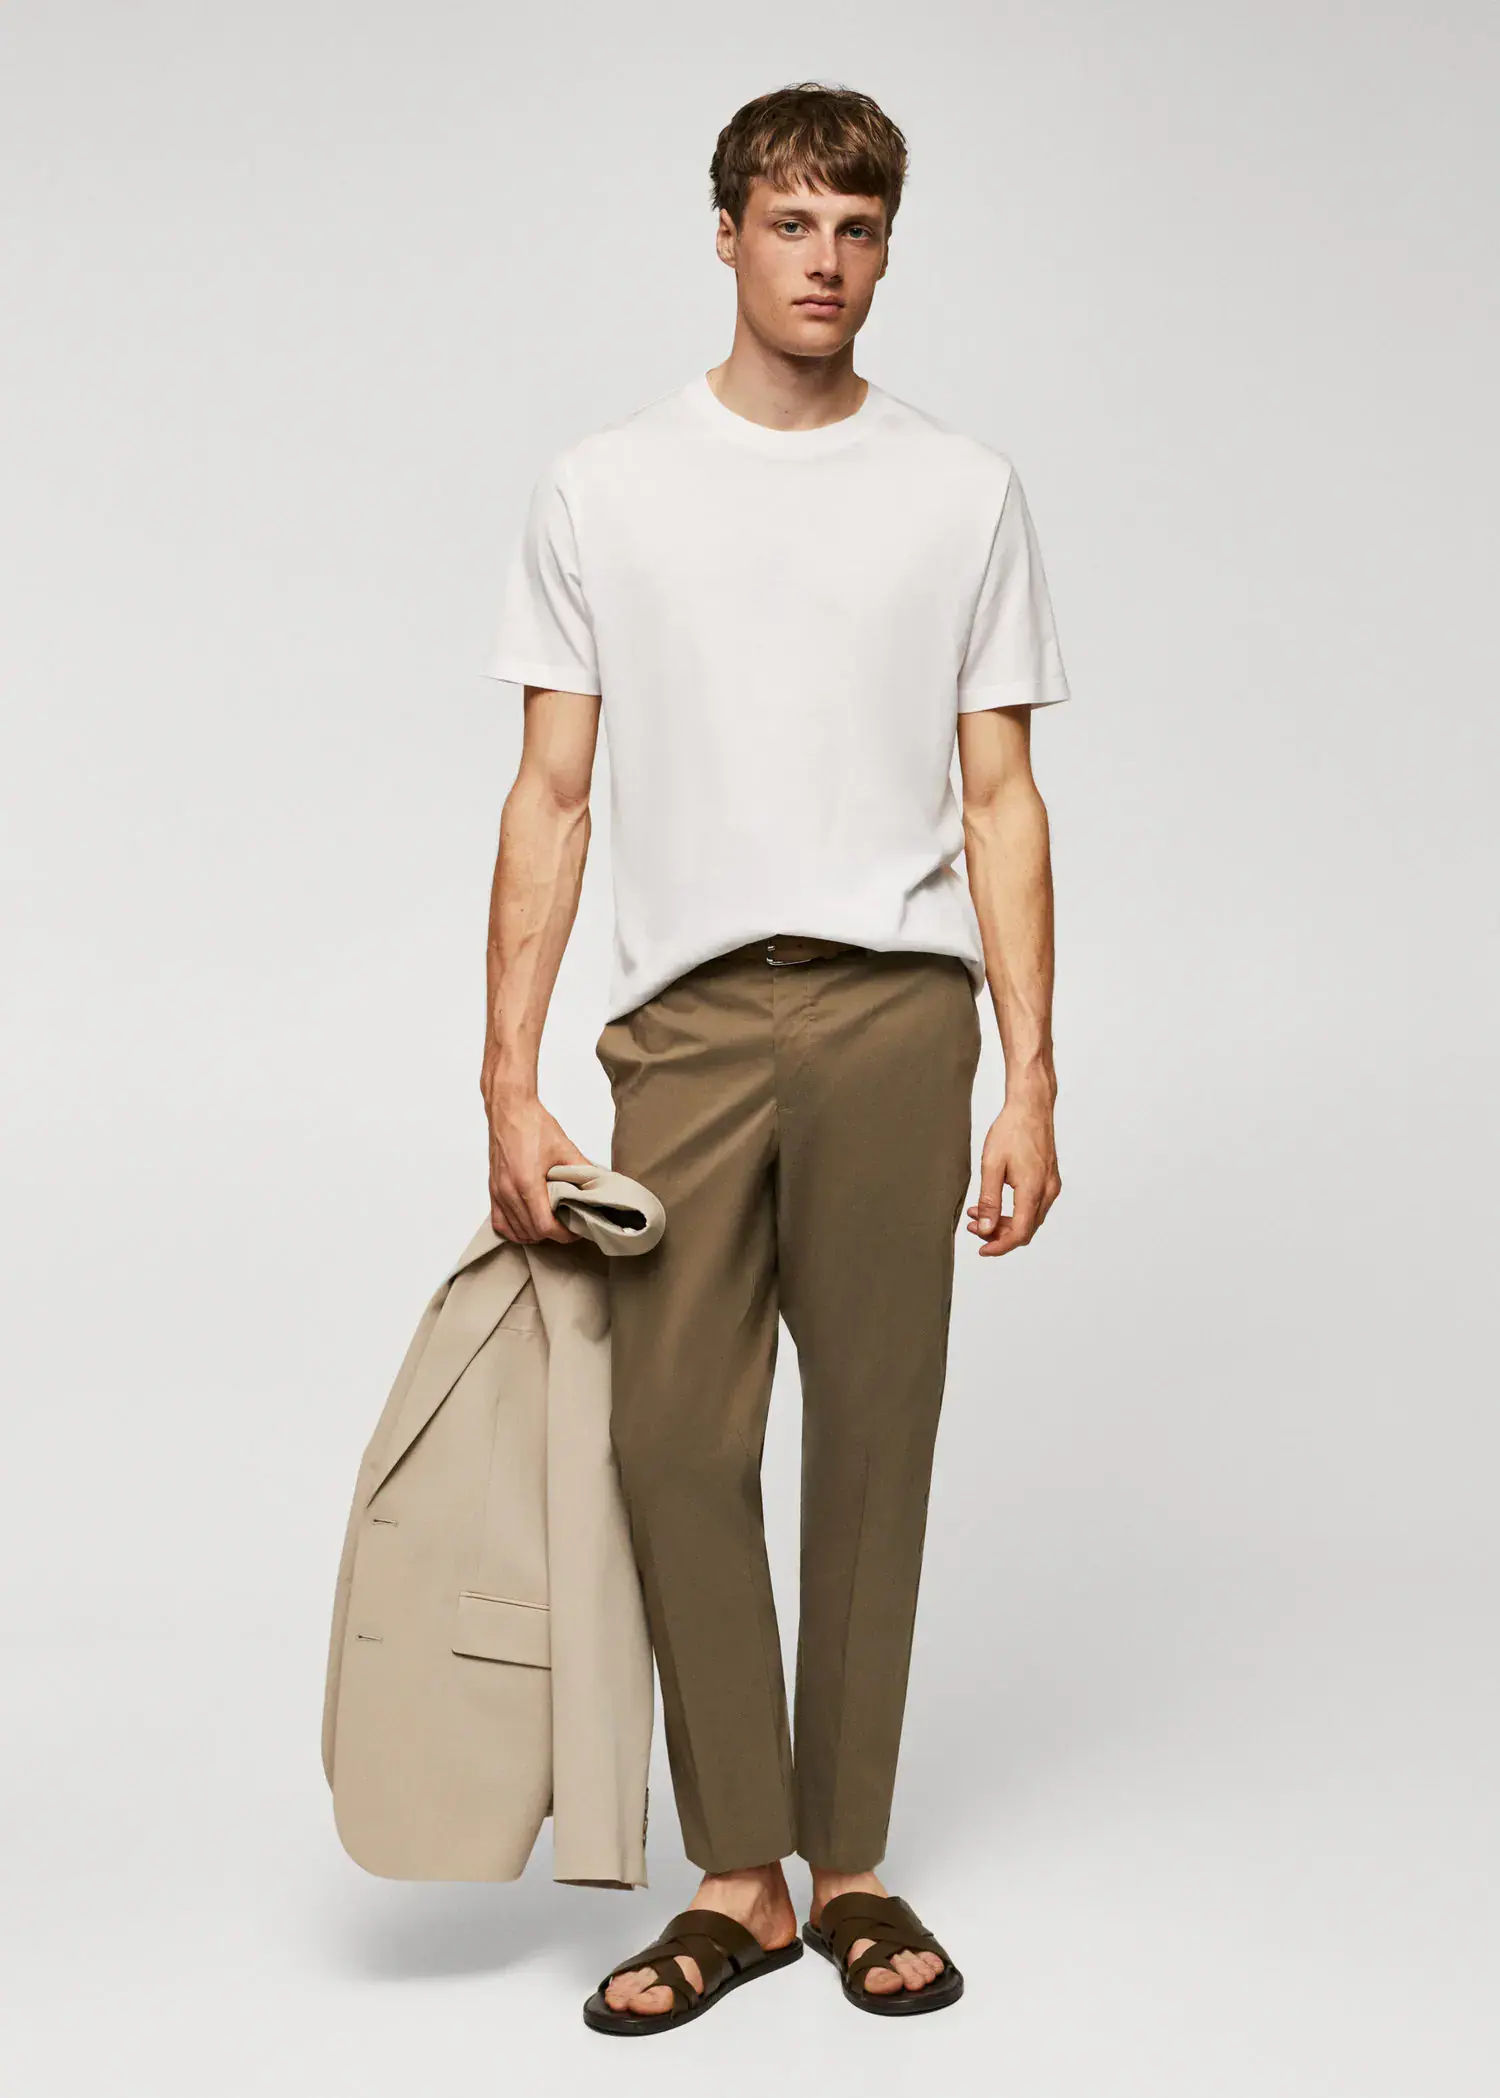 Mango Mercerised regular-fit t-shirt. a man in a white t-shirt is holding a bag. 